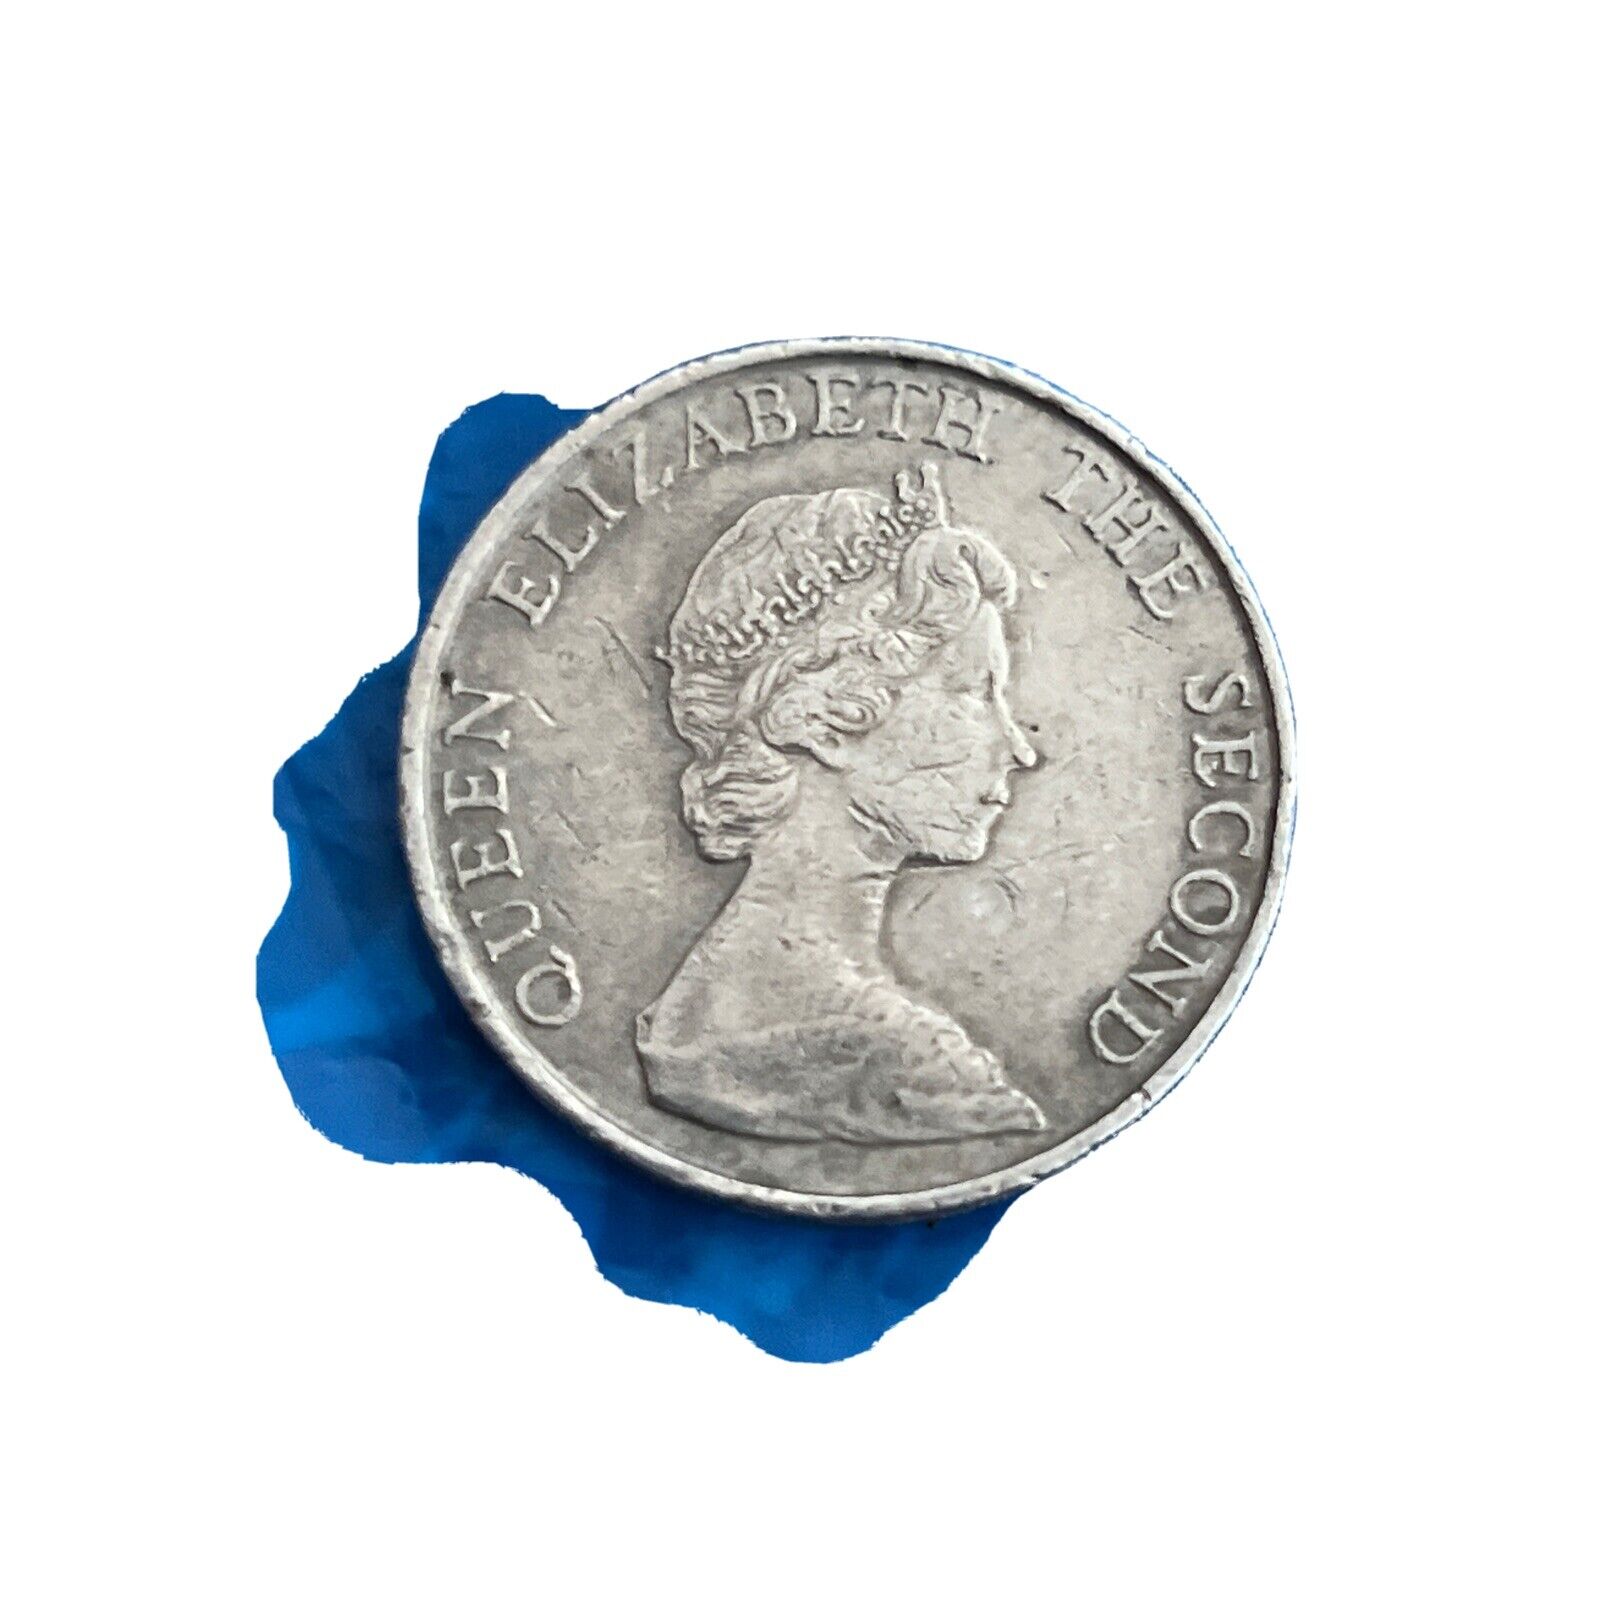 1981 Hong Kong Queen Elizabeth II, 5 HK Dollar coin